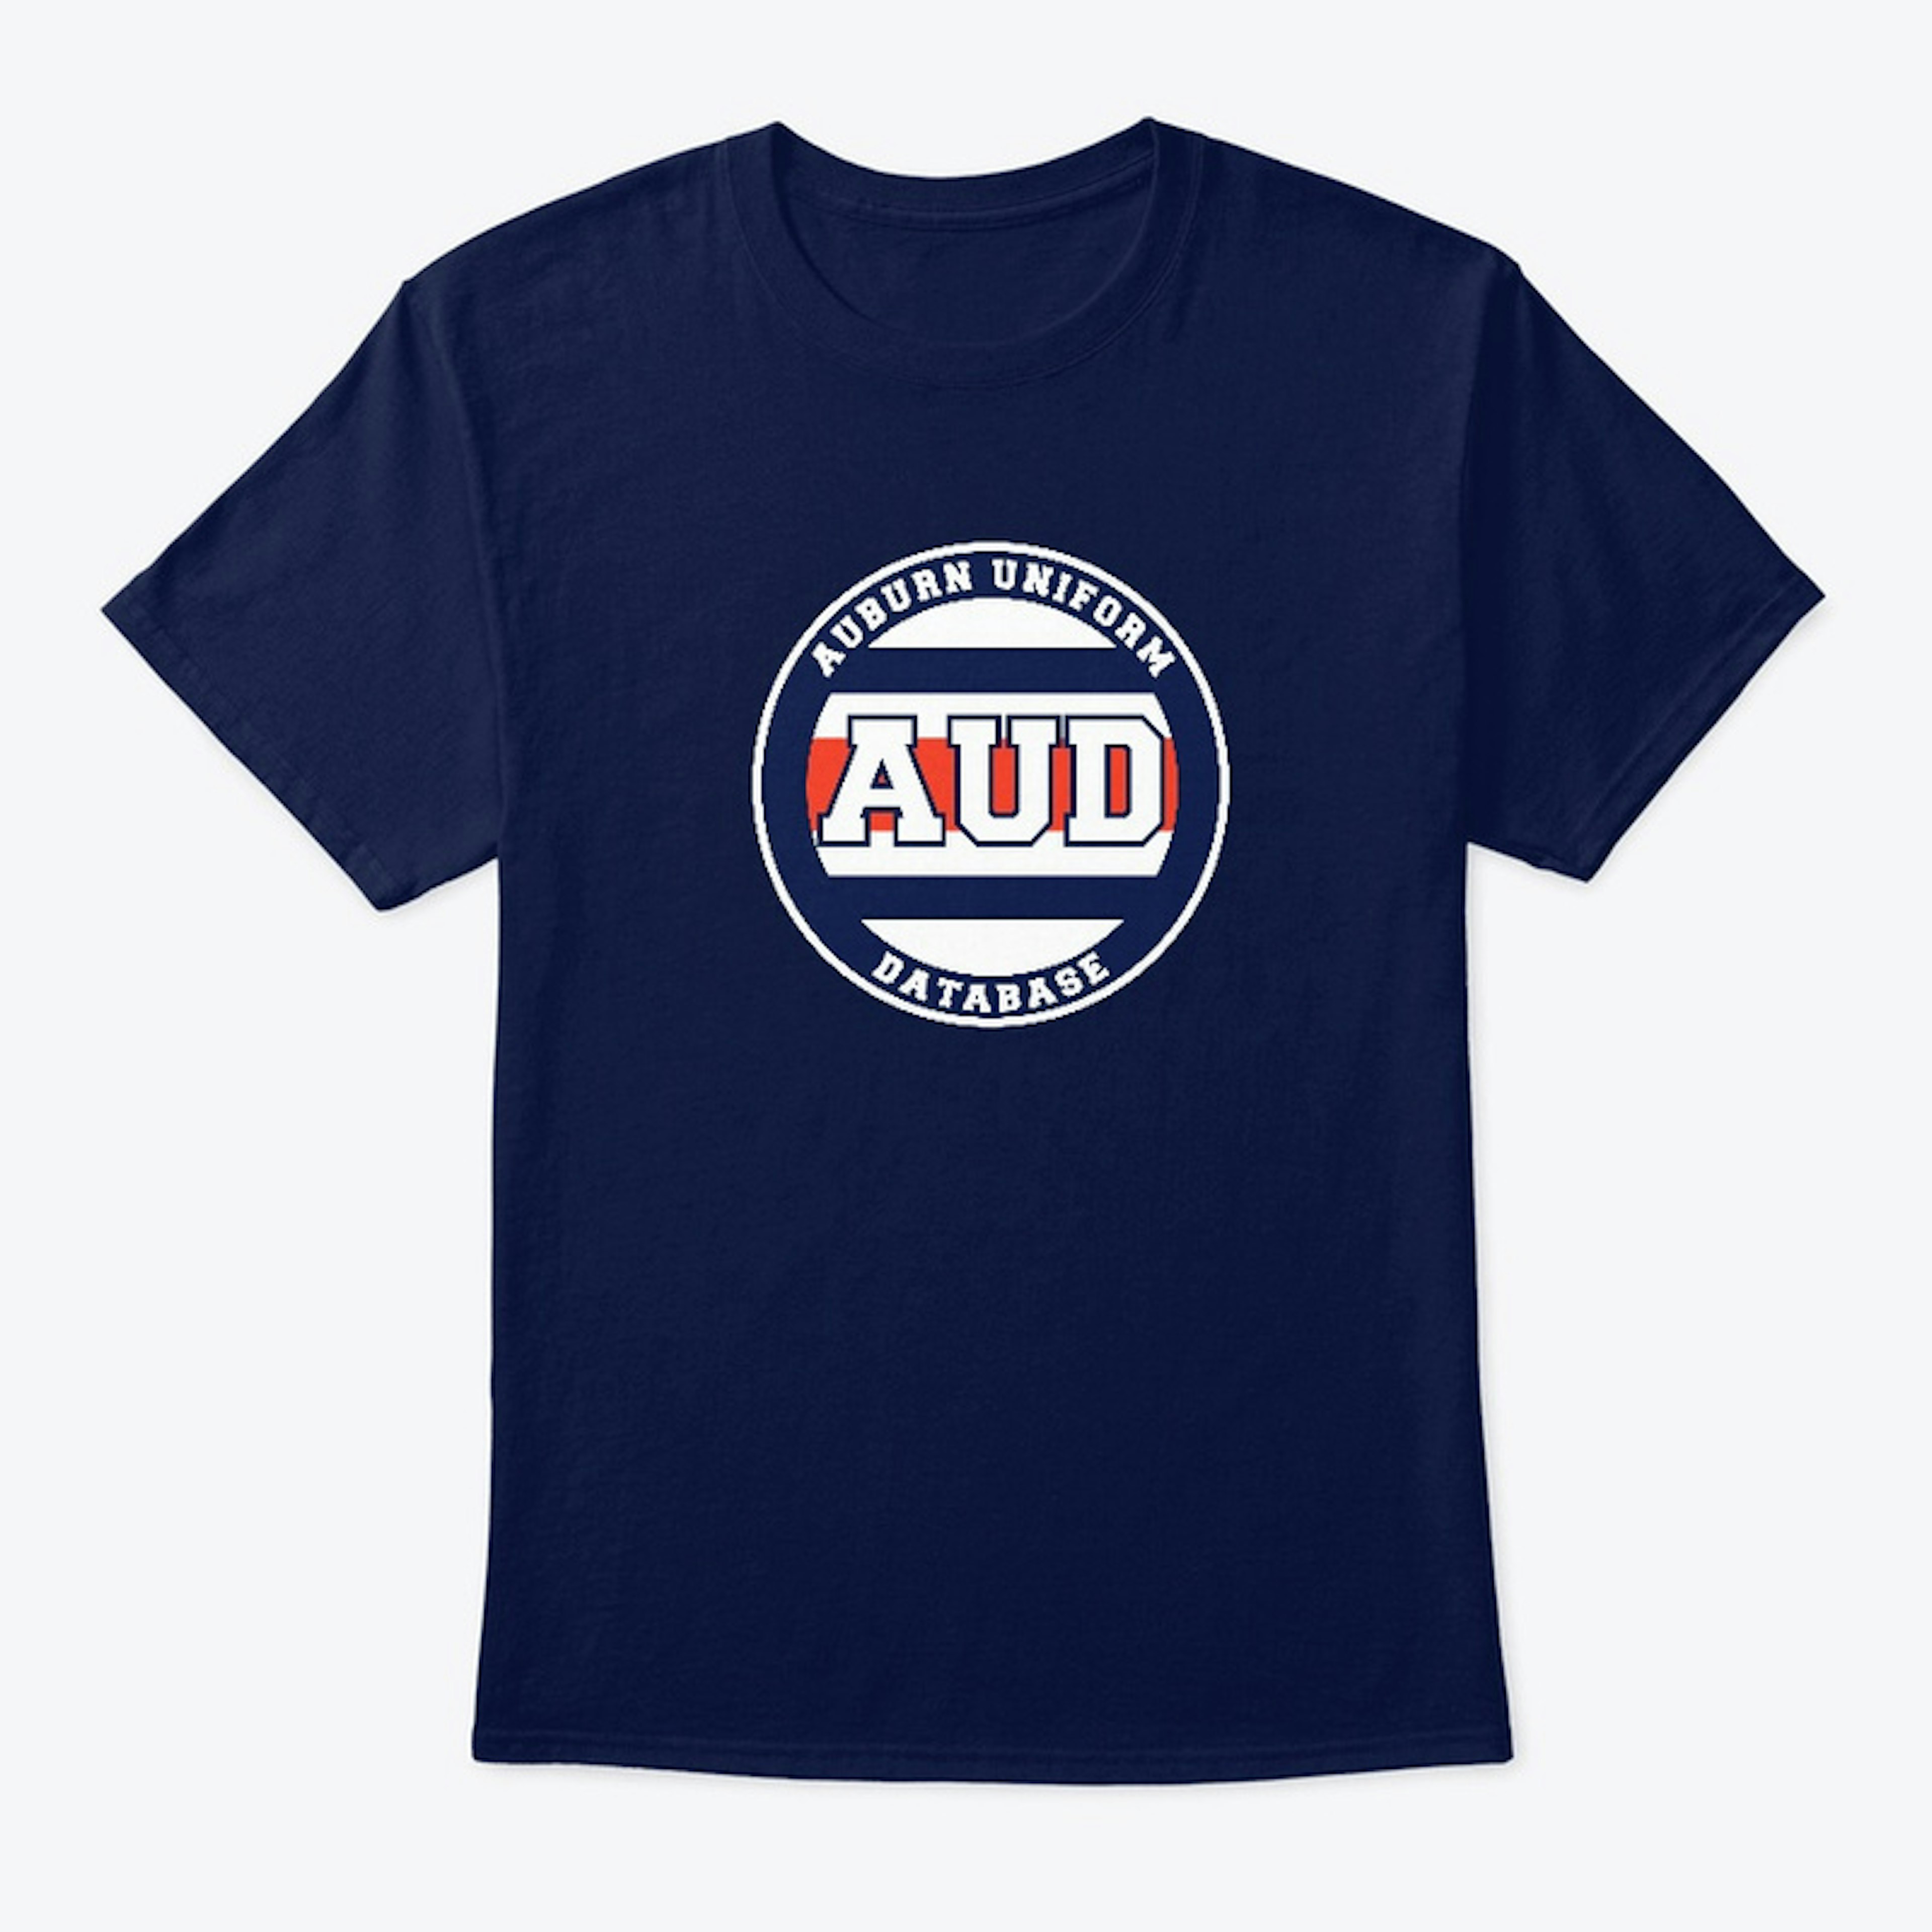 Auburn Uniform Database Logo T-Shirt